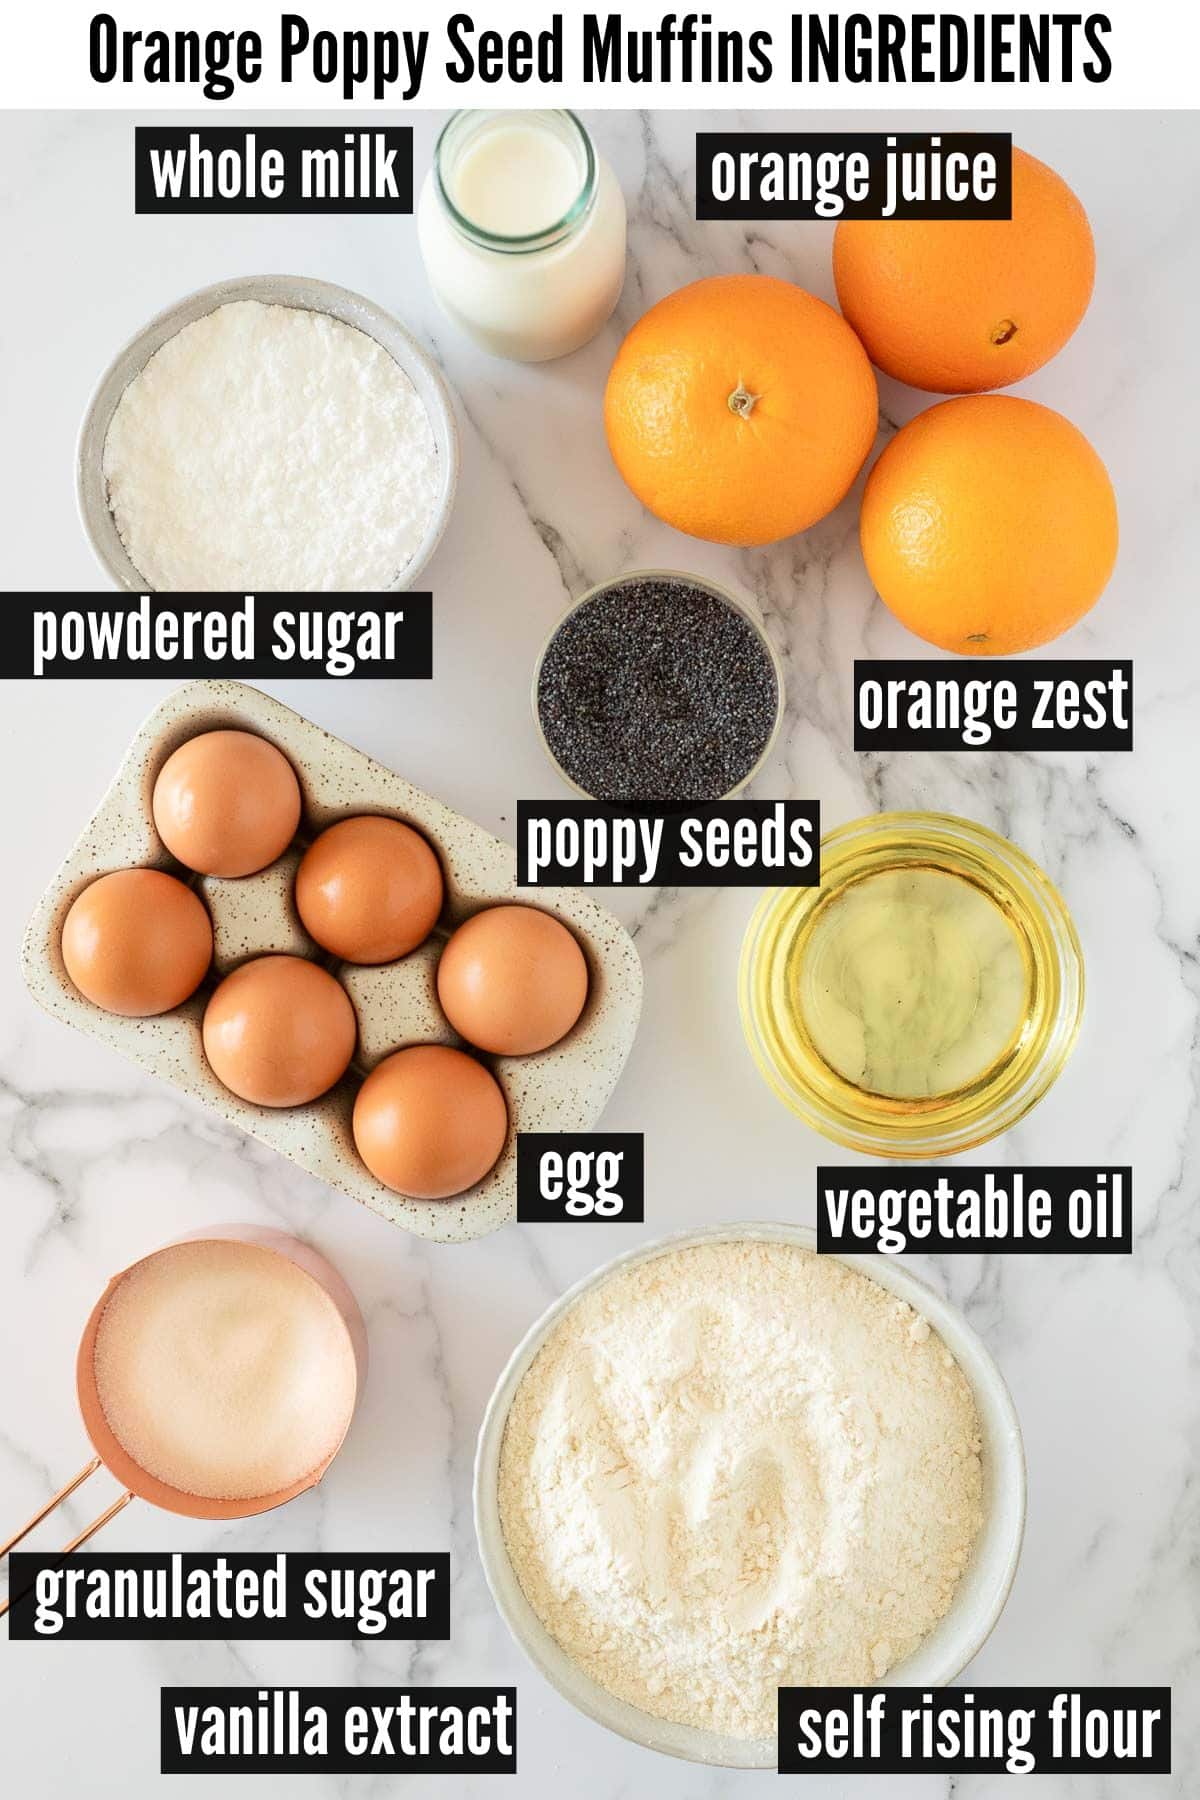 orange poppy seed muffins labelled ingredients.